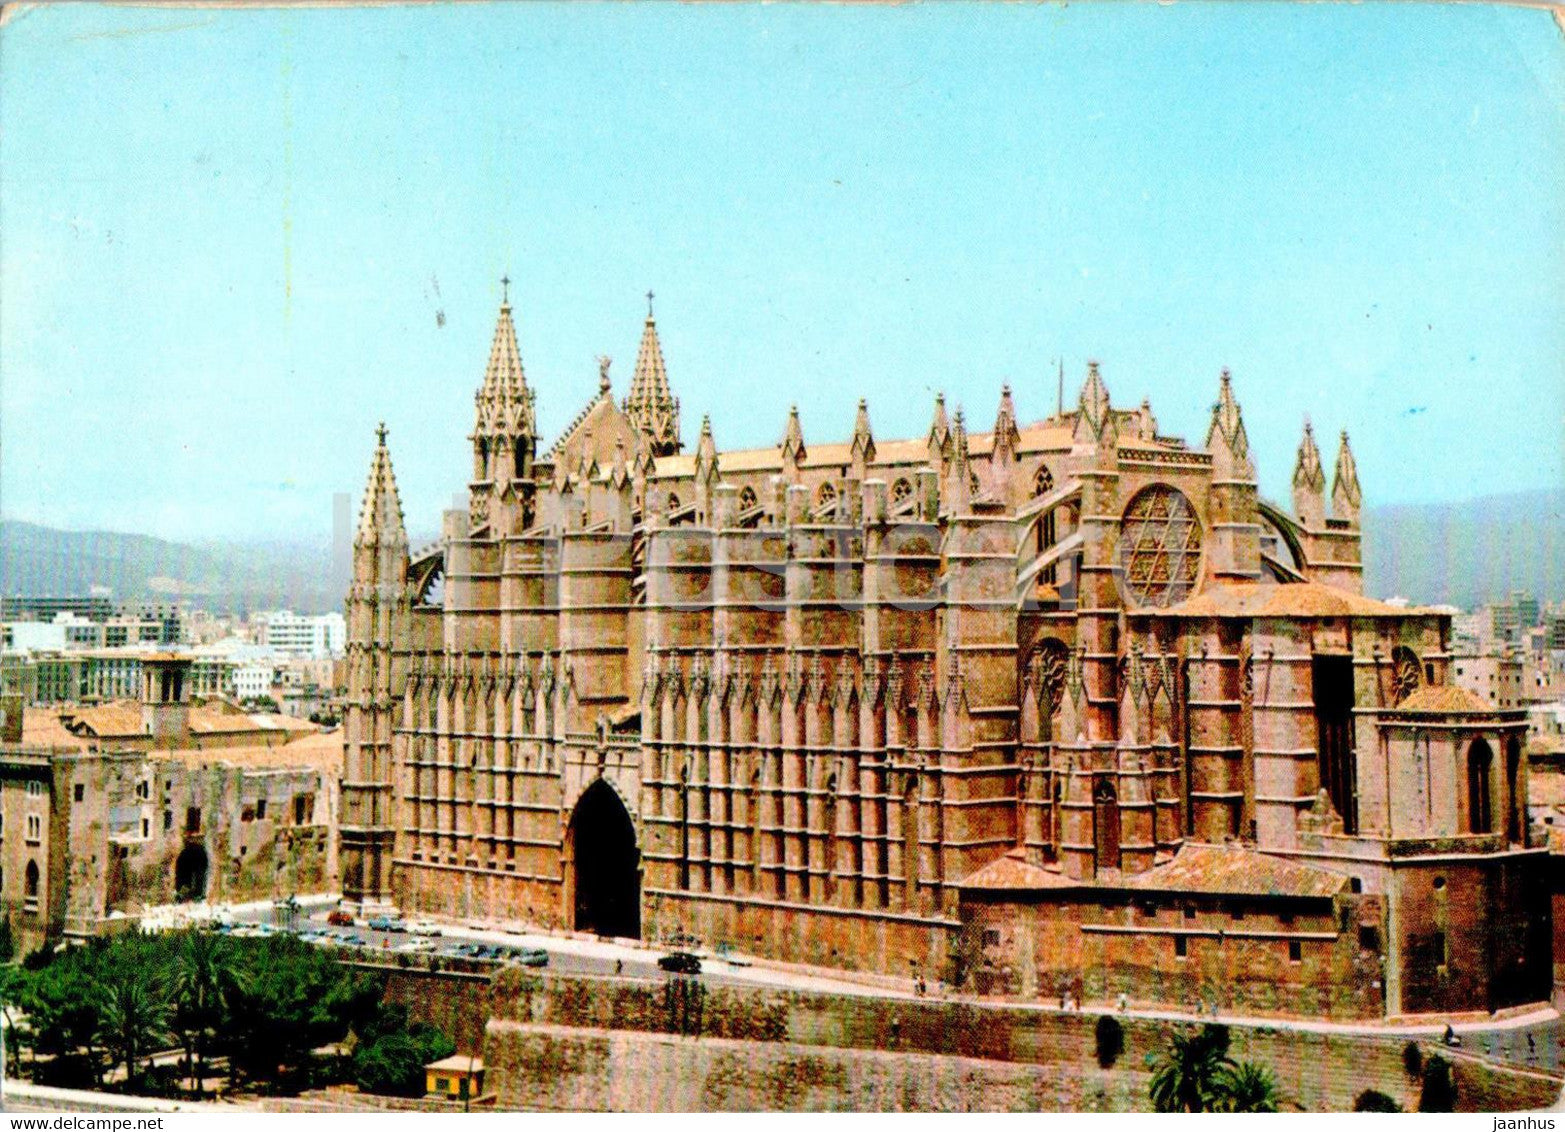 Palma de Mallorca - La catedral - cathedral - ship - 1967 - Spain - used - JH Postcards